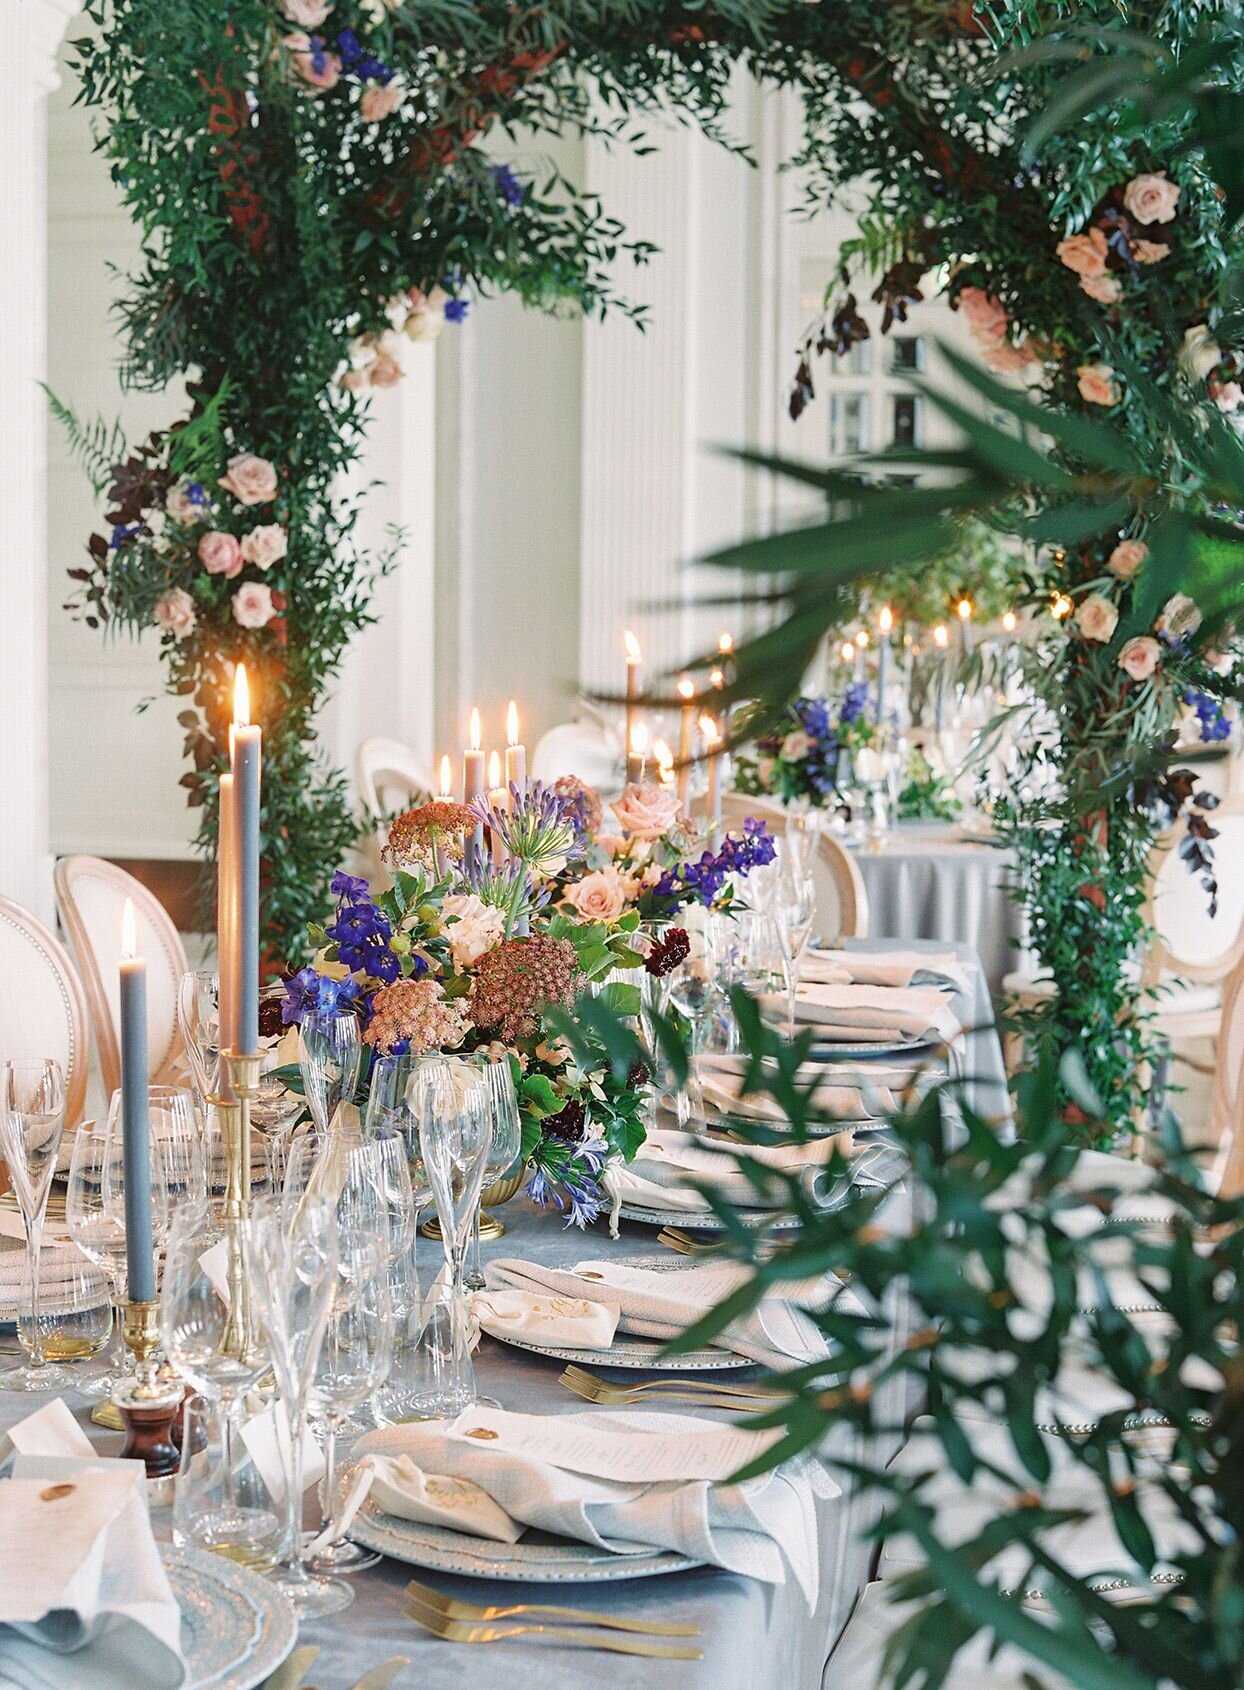 Wedding table decor in Adare Manor - Floralearth Wedding Florist